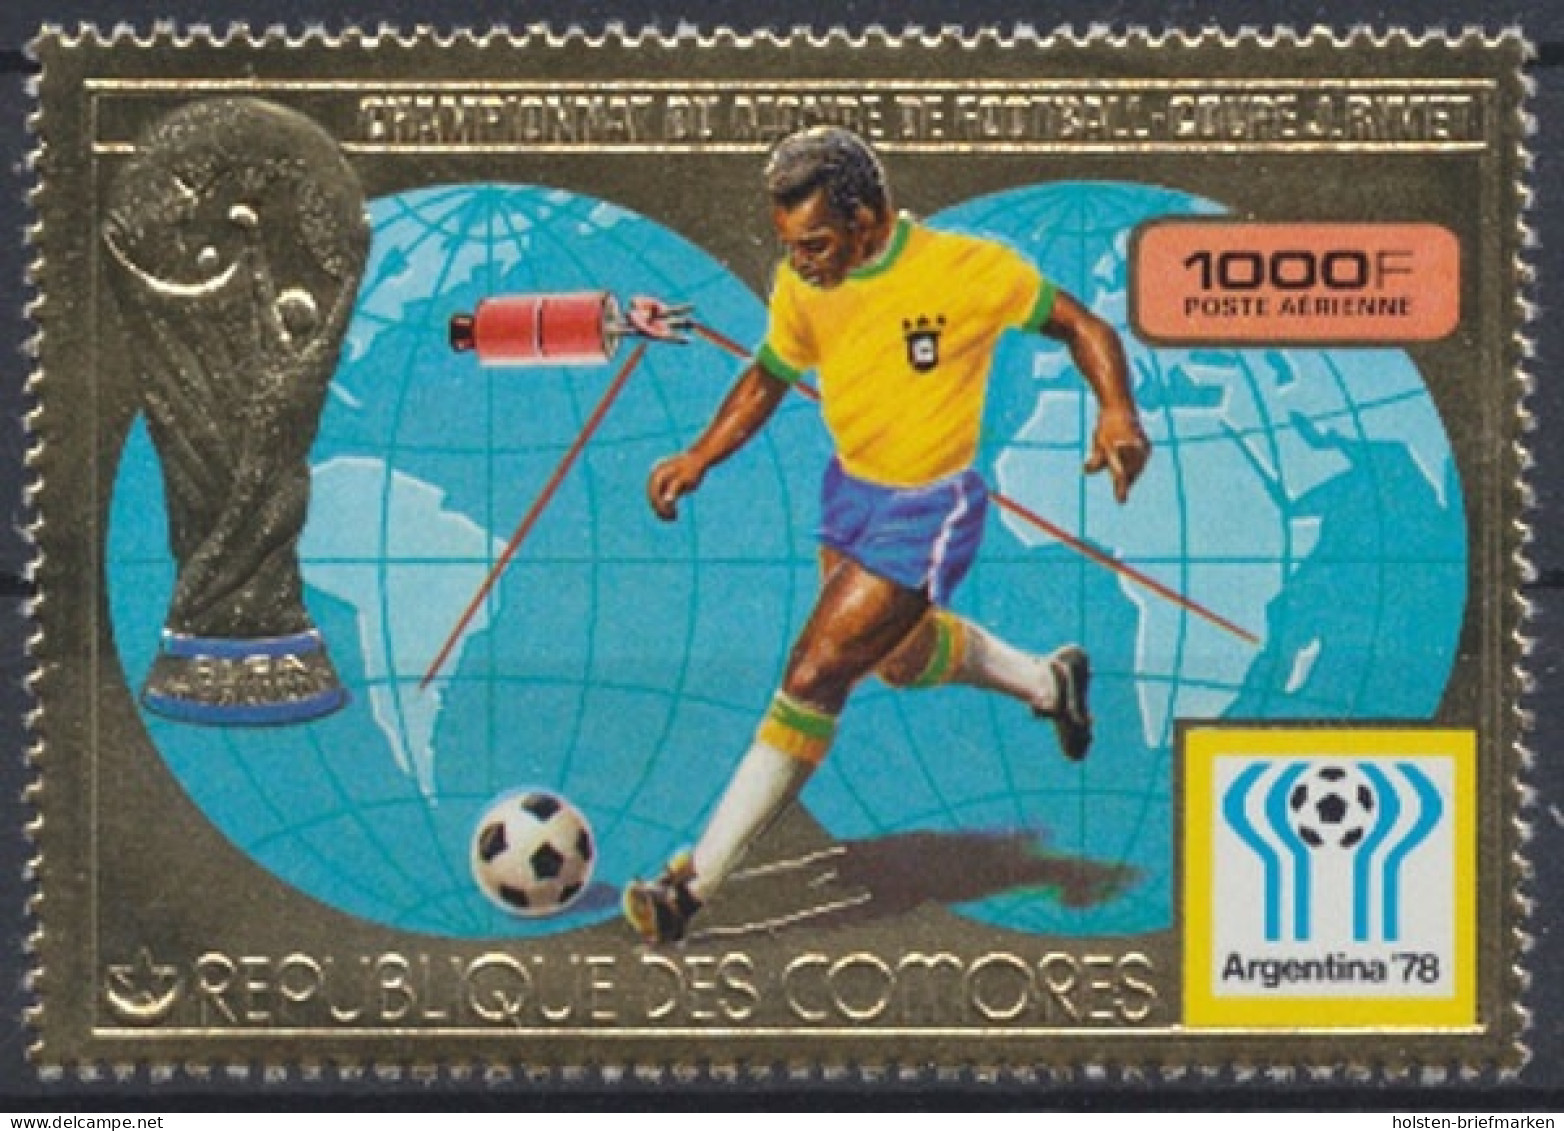 Komoren, Fußball, MiNr. 391 A, Postfrisch - Comoros